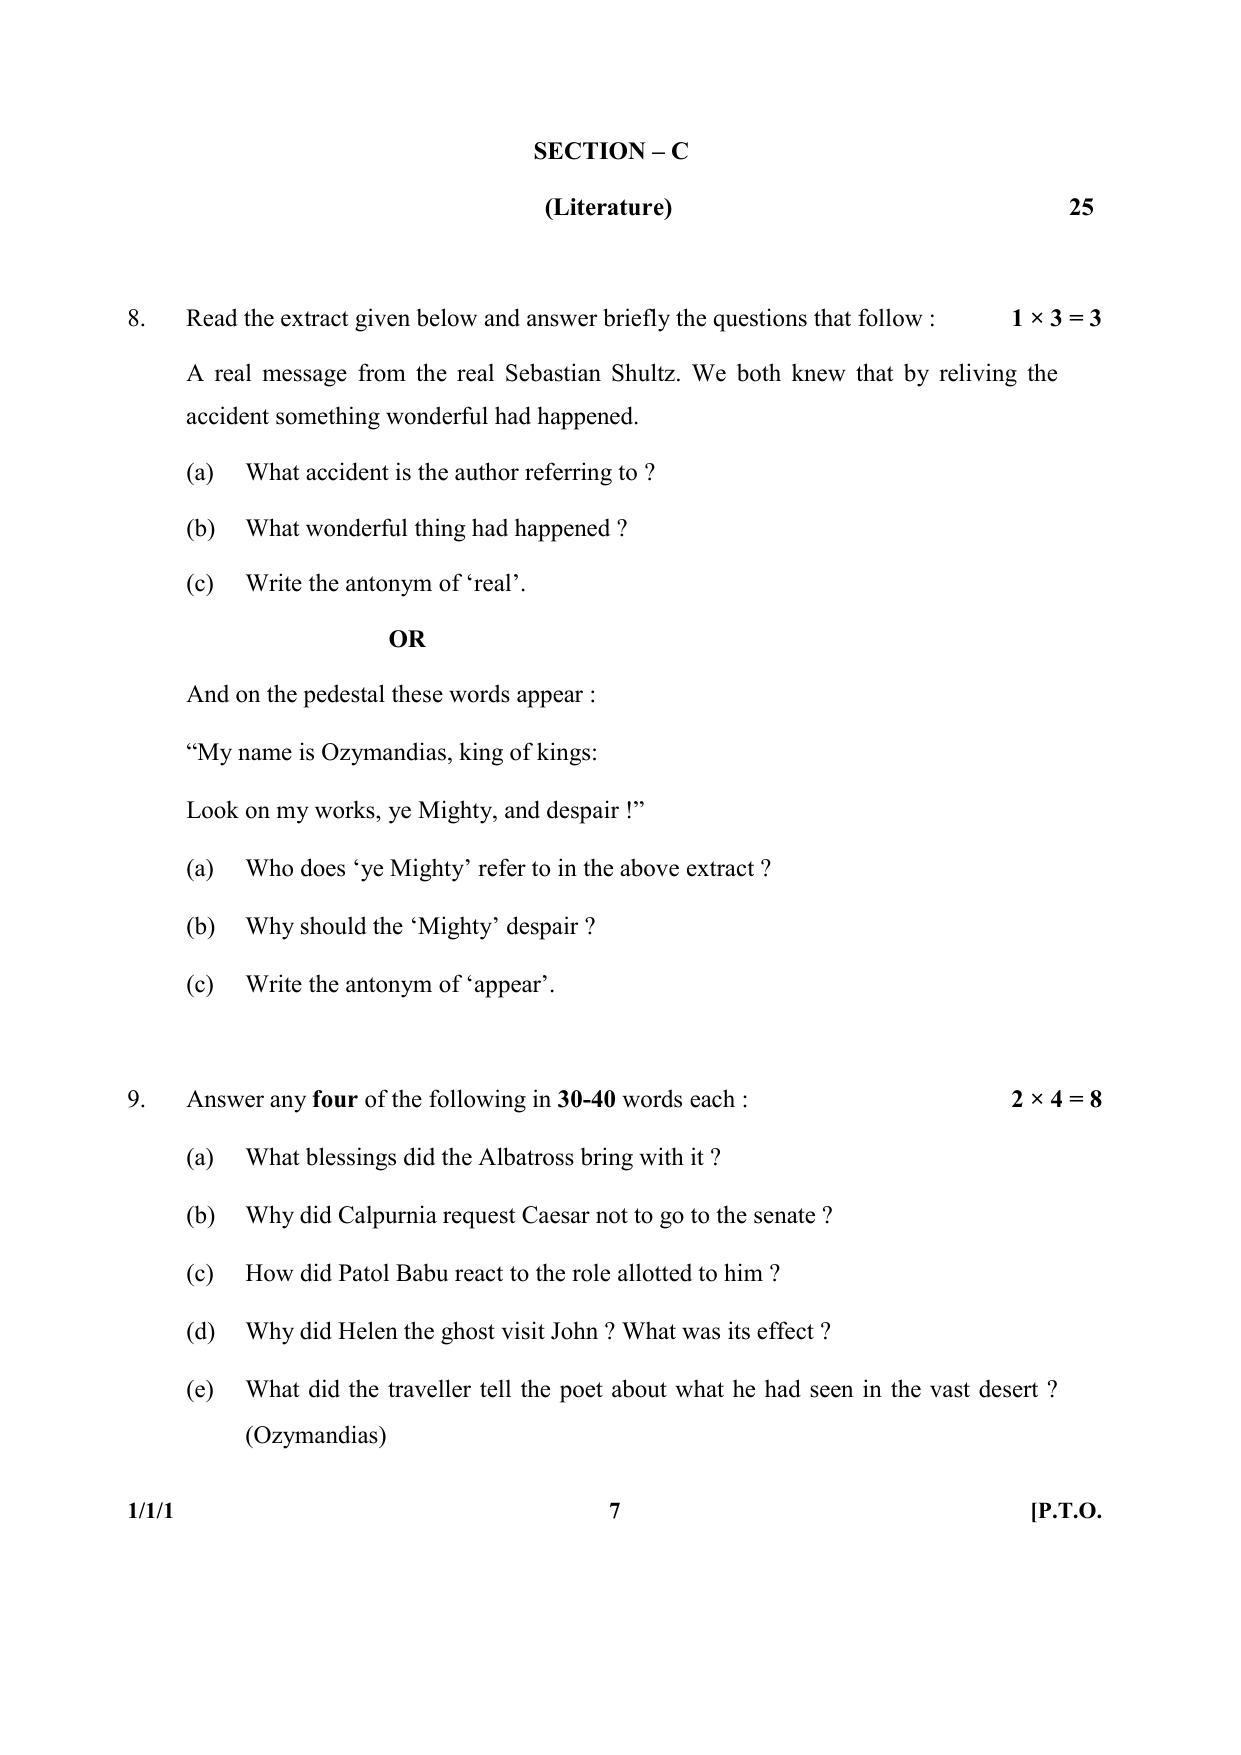 CBSE Class 10 1-1-1 (Eng.) 2017-comptt Question Paper - Page 7